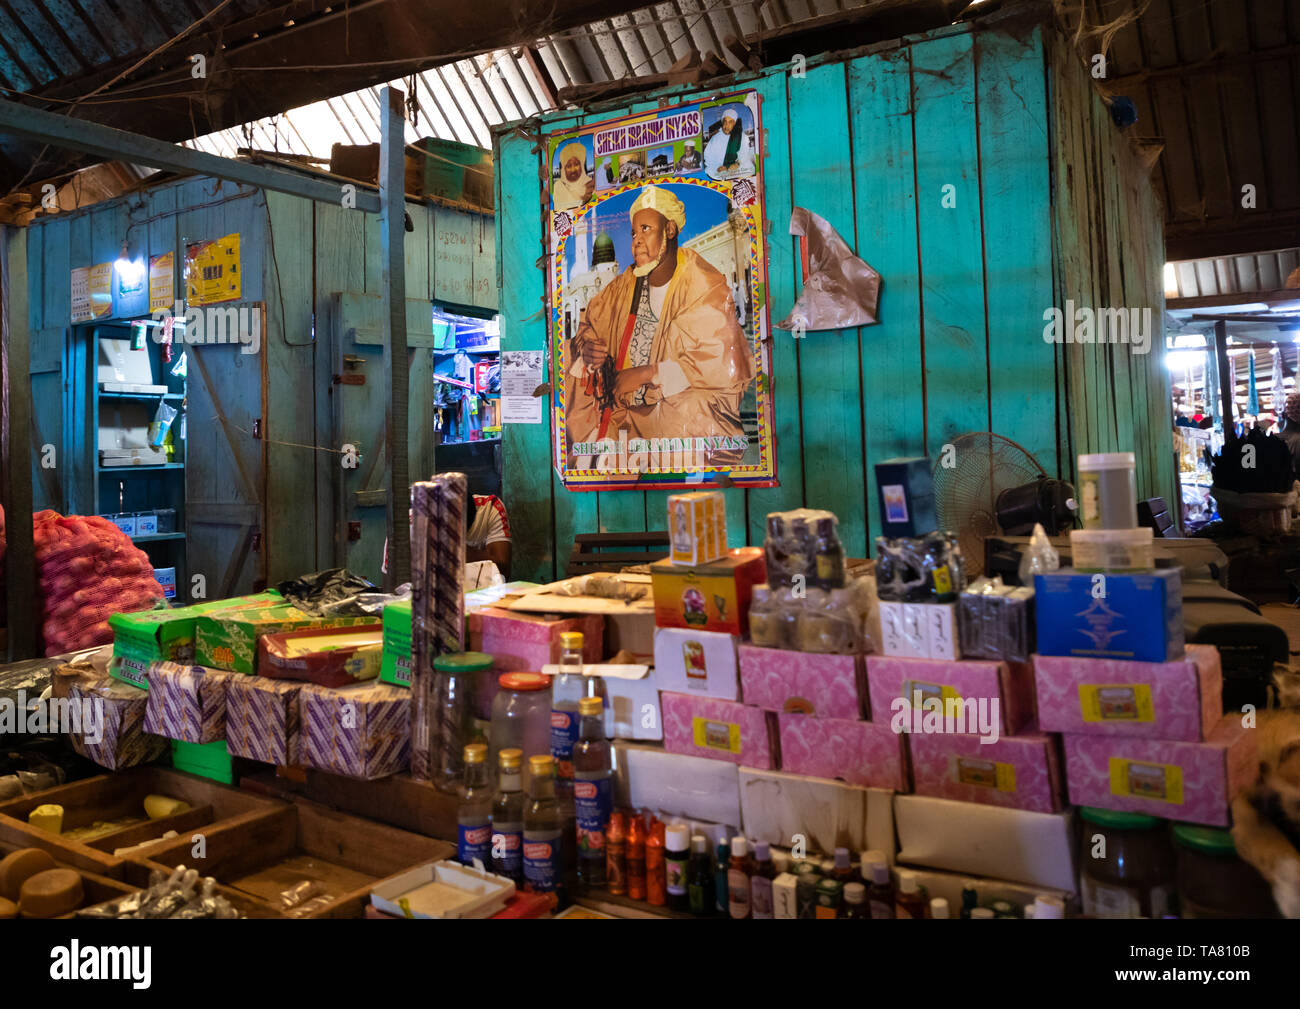 Poster of sheikh Ibrahim Inyass in the market, Poro region, Korhogo, Ivory Coast Stock Photo